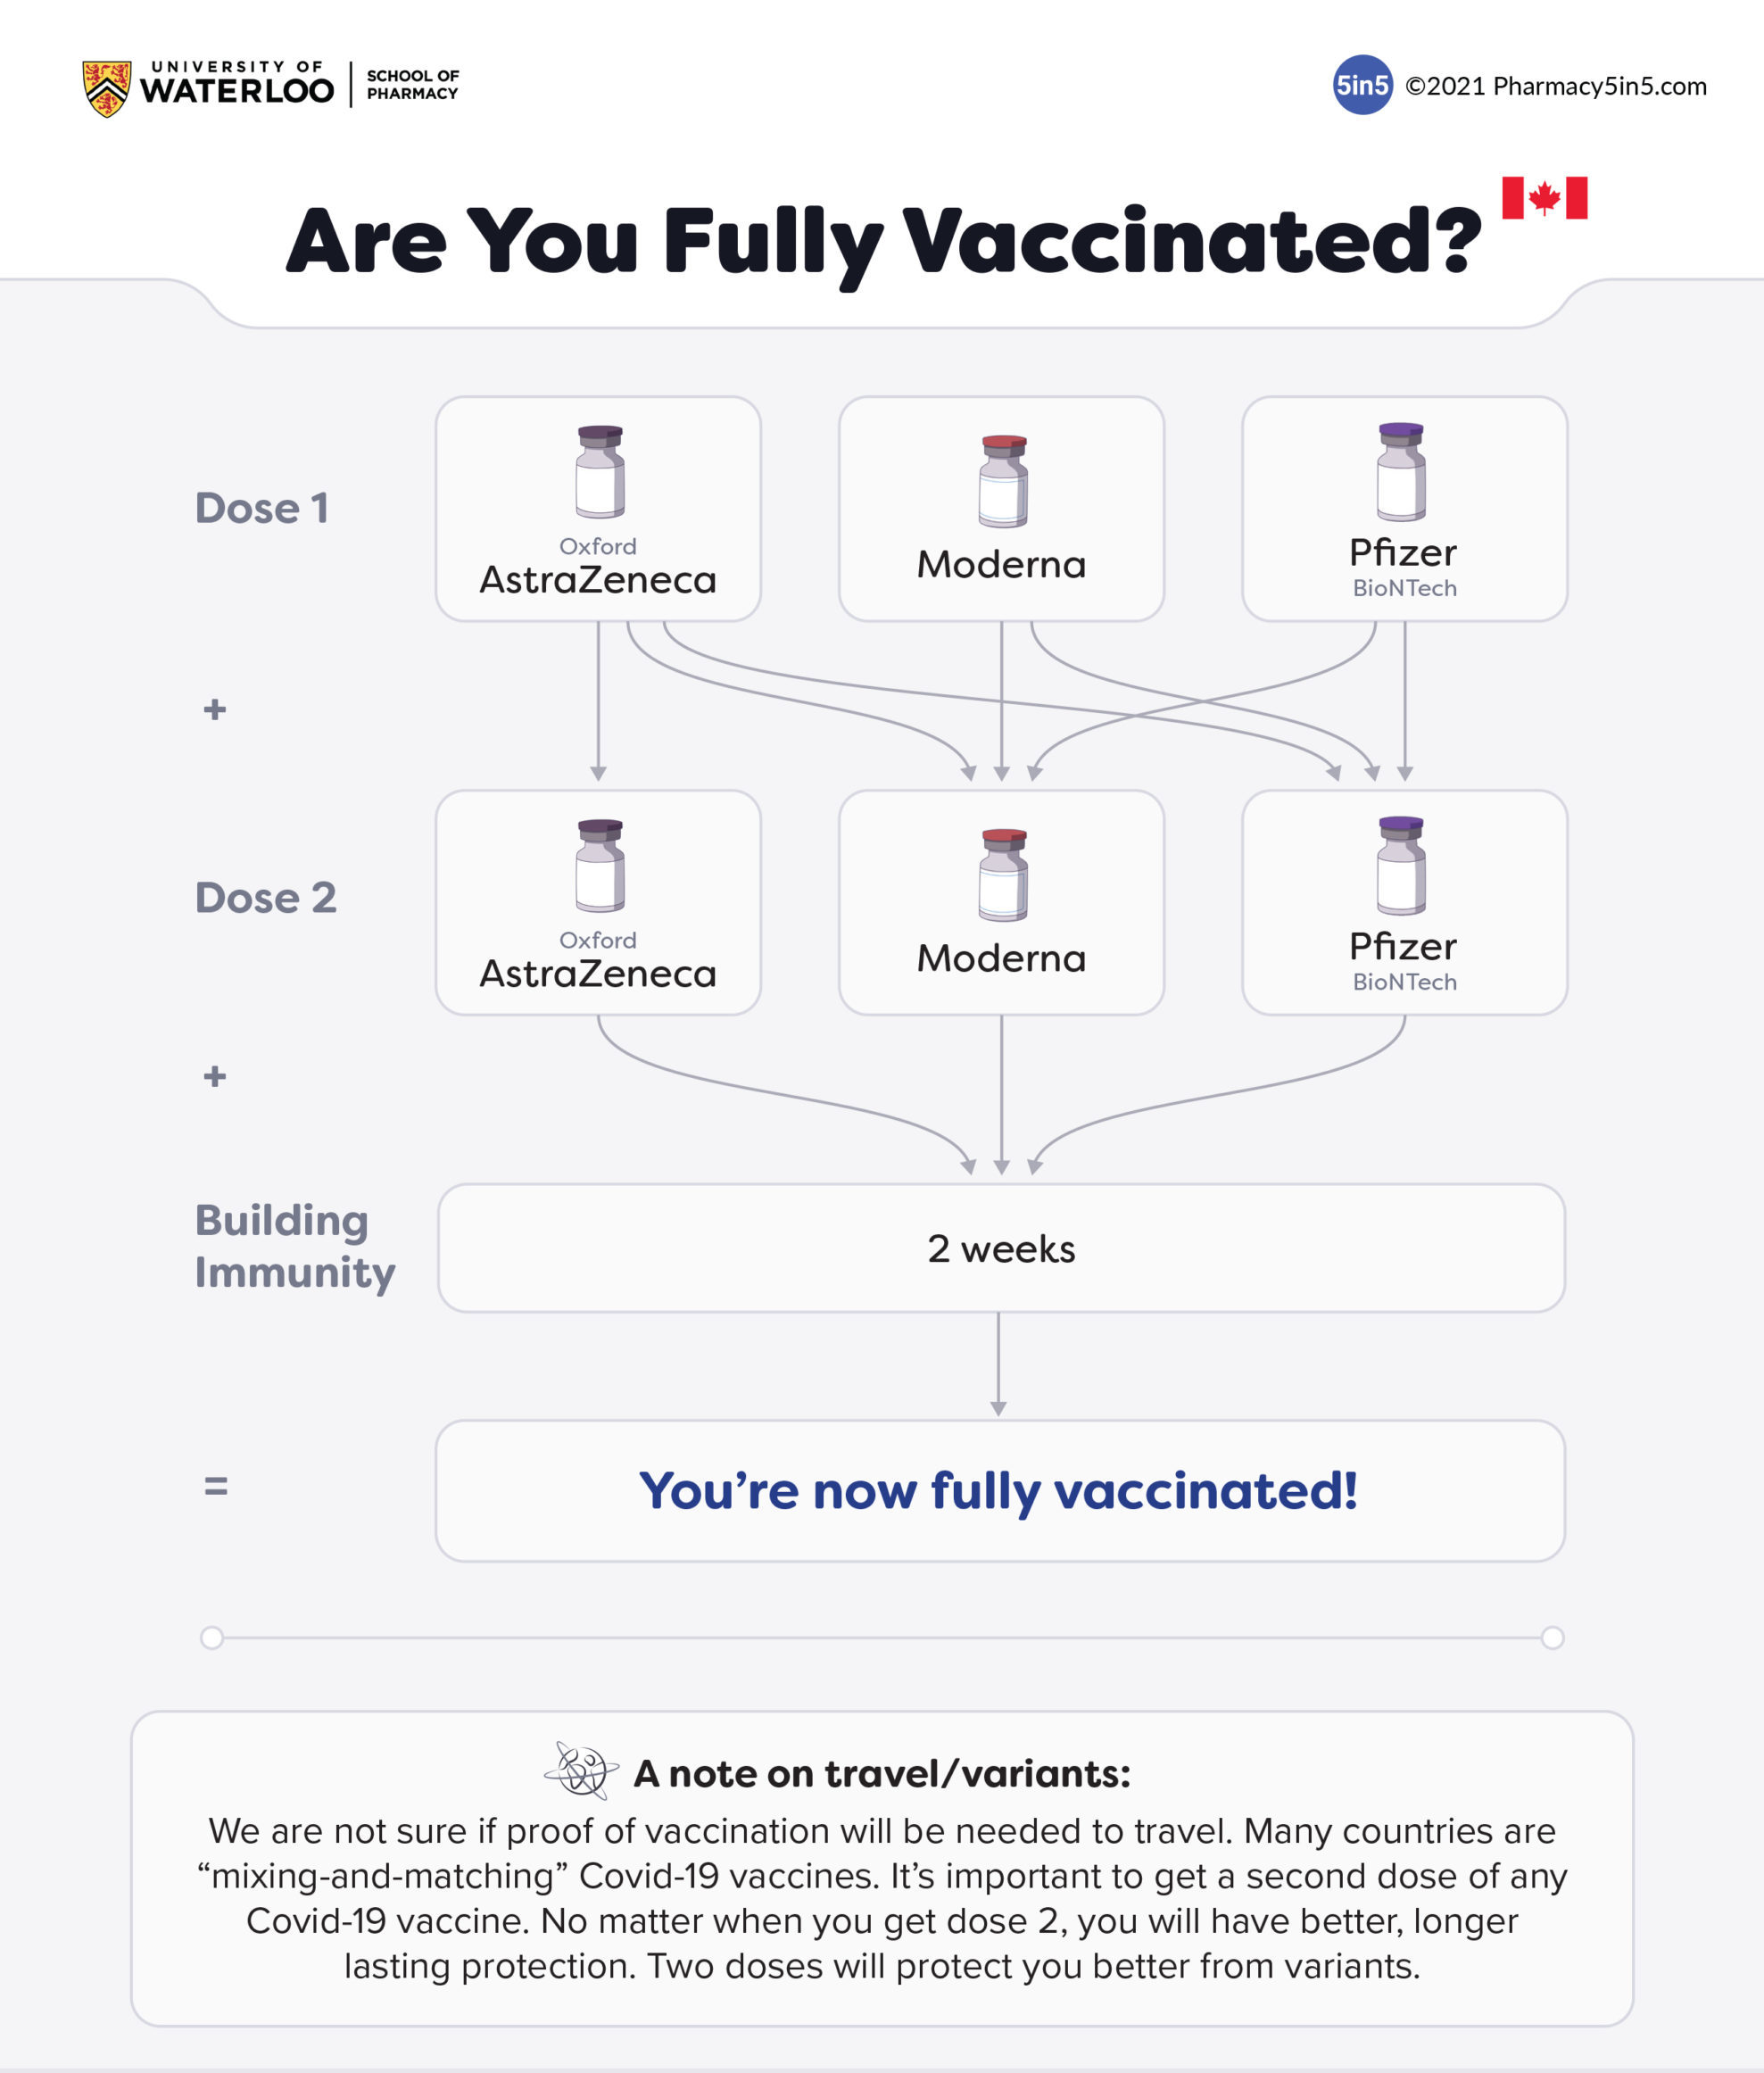 Az vaccine efficacy